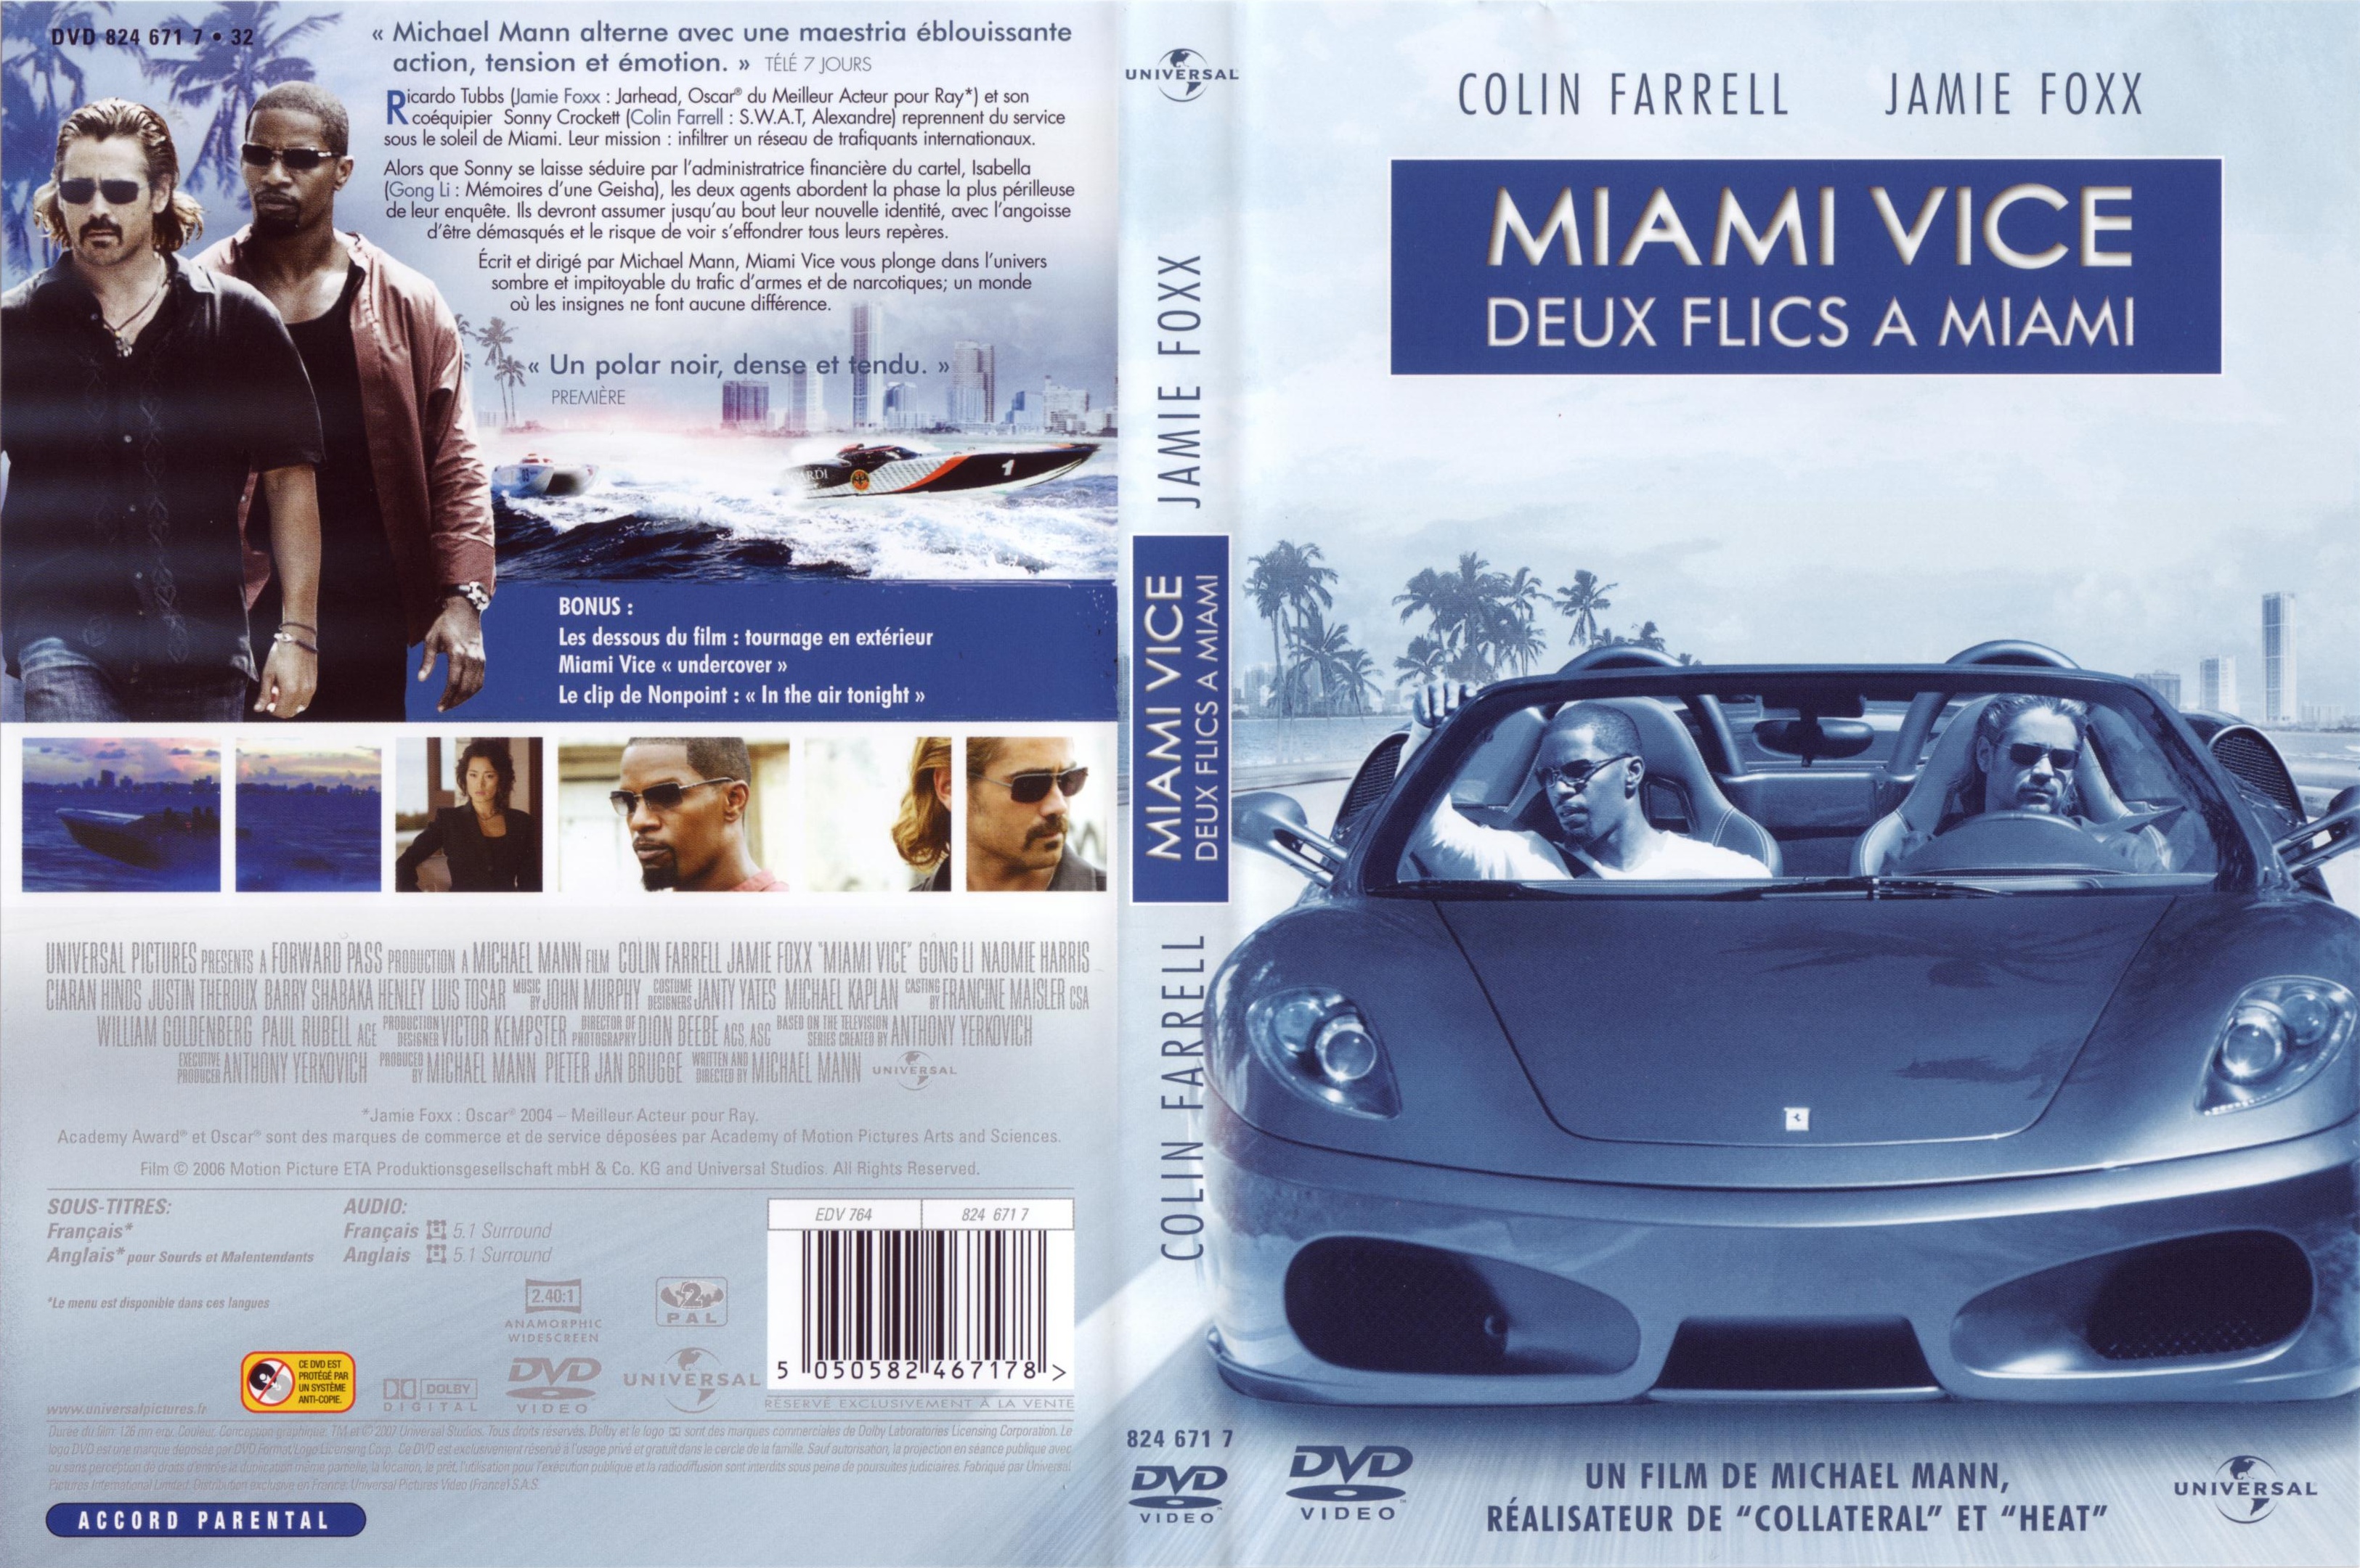 Jaquette DVD Miami vice - Deux flics  Miami